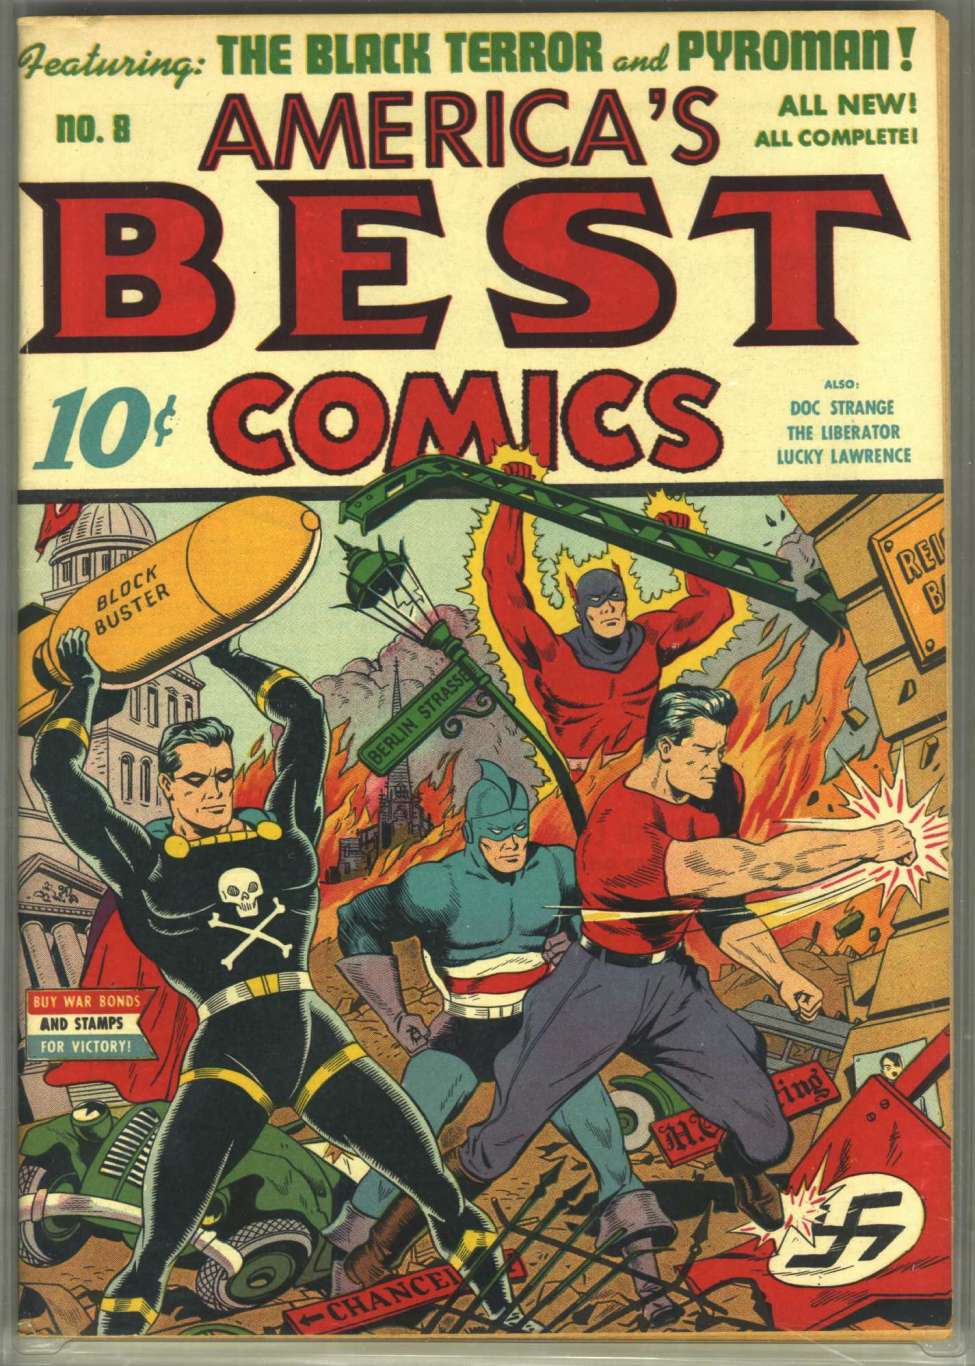 Comic Book Cover For America's Best Comics 8 (paper/8fiche)